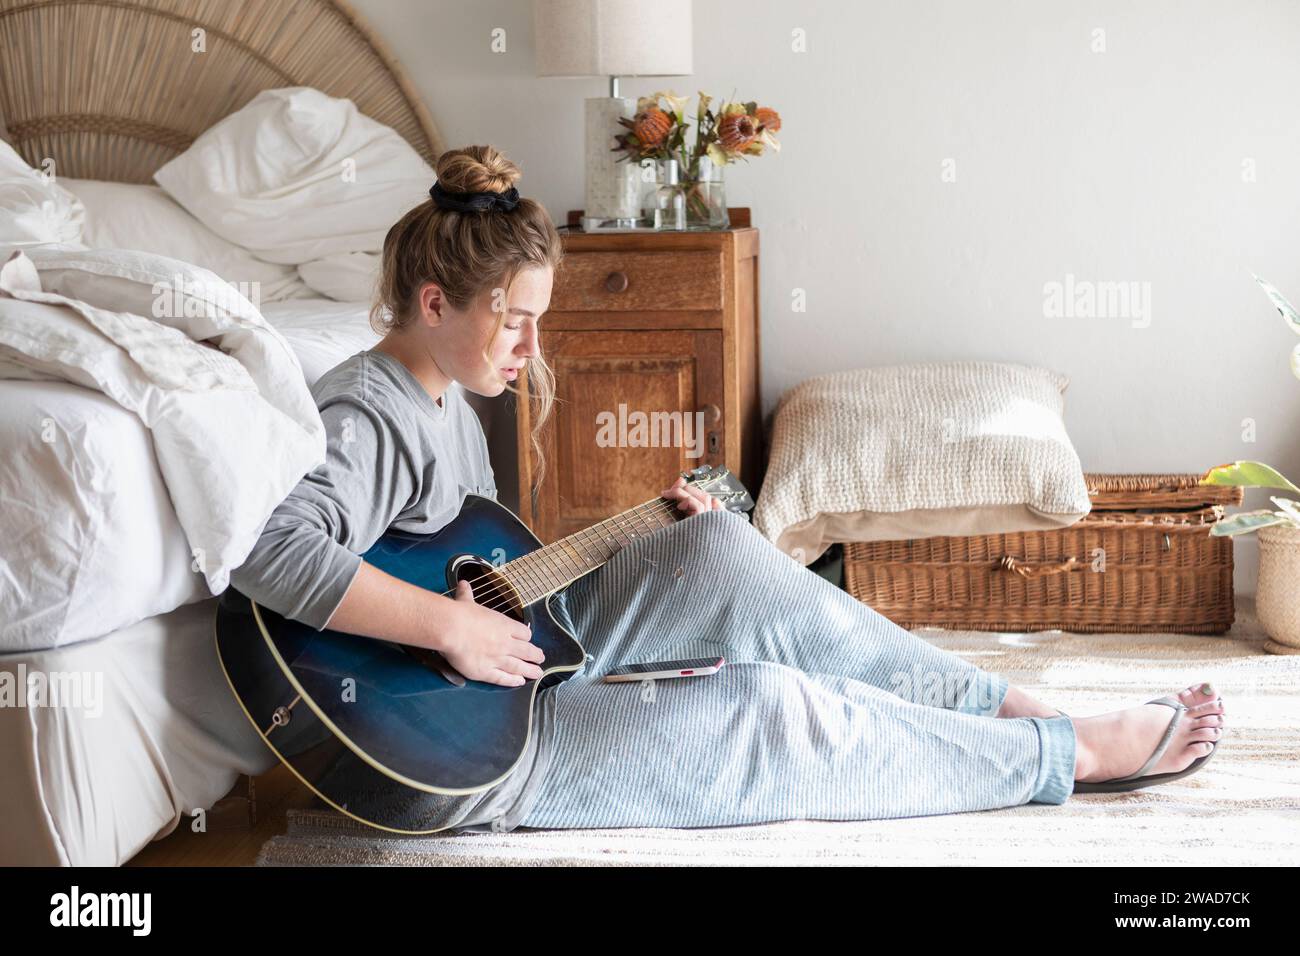 Teenage girl (16-17) playing guitar in bedroom Stock Photo